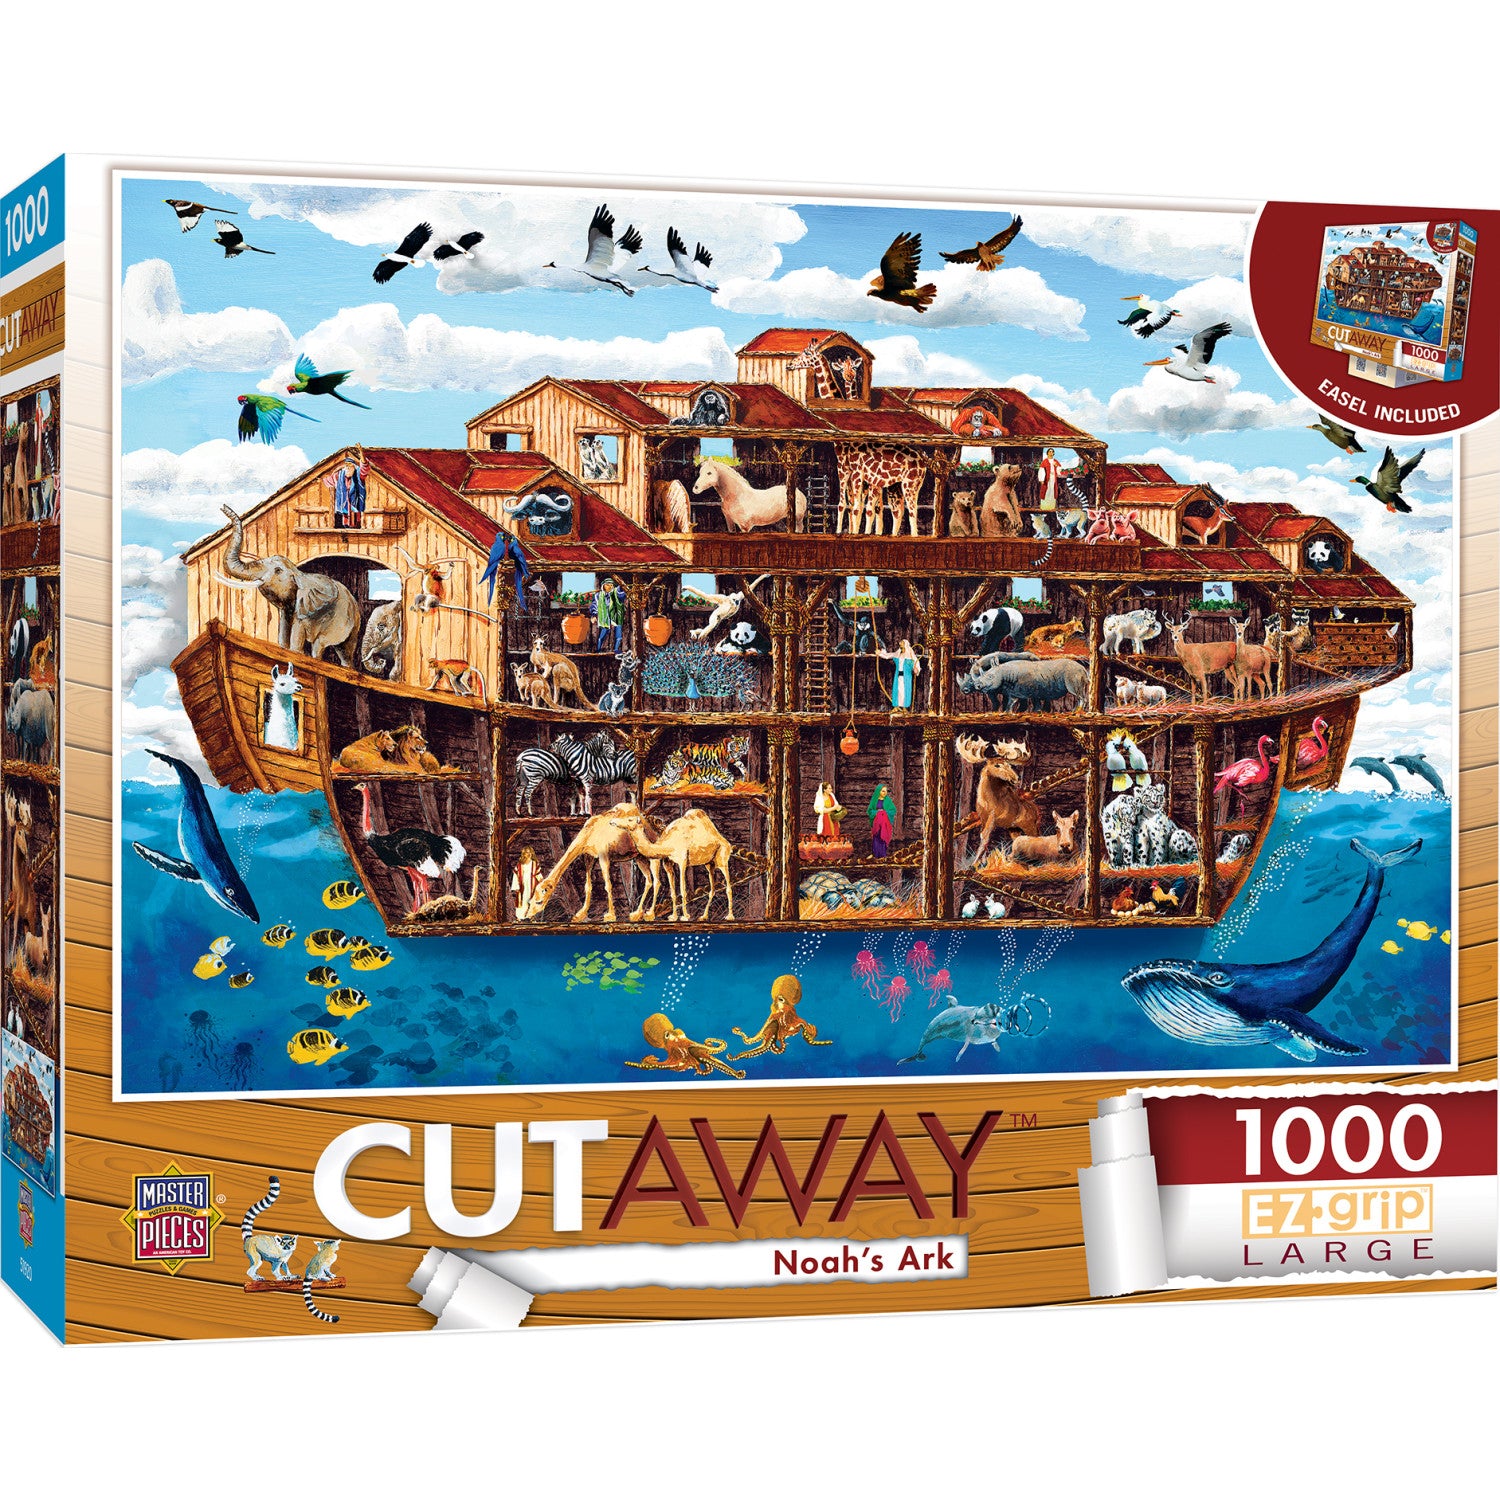 Cutaway - Noah's Ark 1000 Piece EZ Grip Jigsaw Puzzle